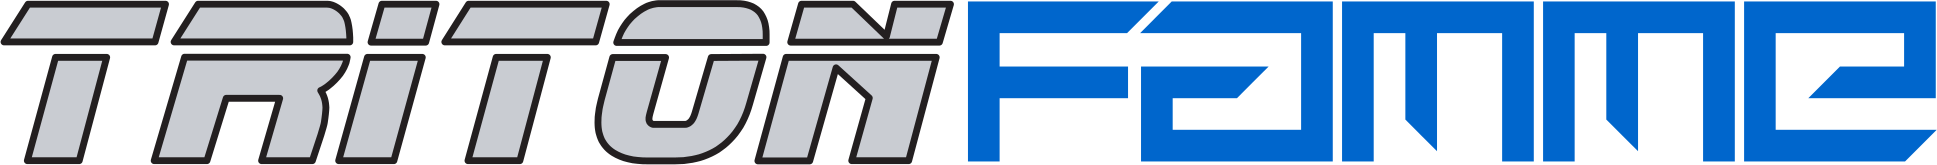 Triton Famme logo